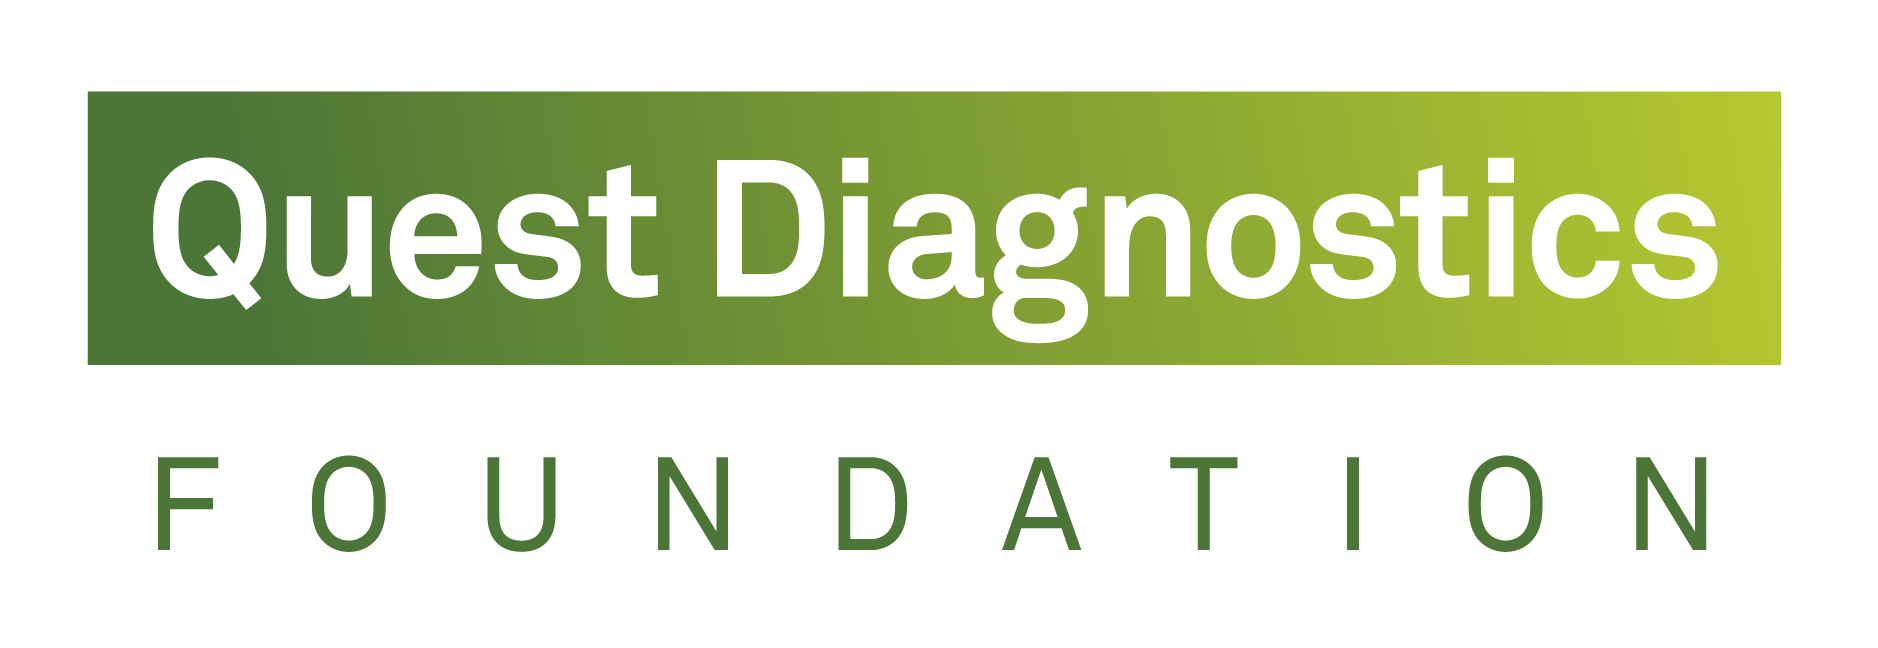 Quest Diagnostics Foundation logo